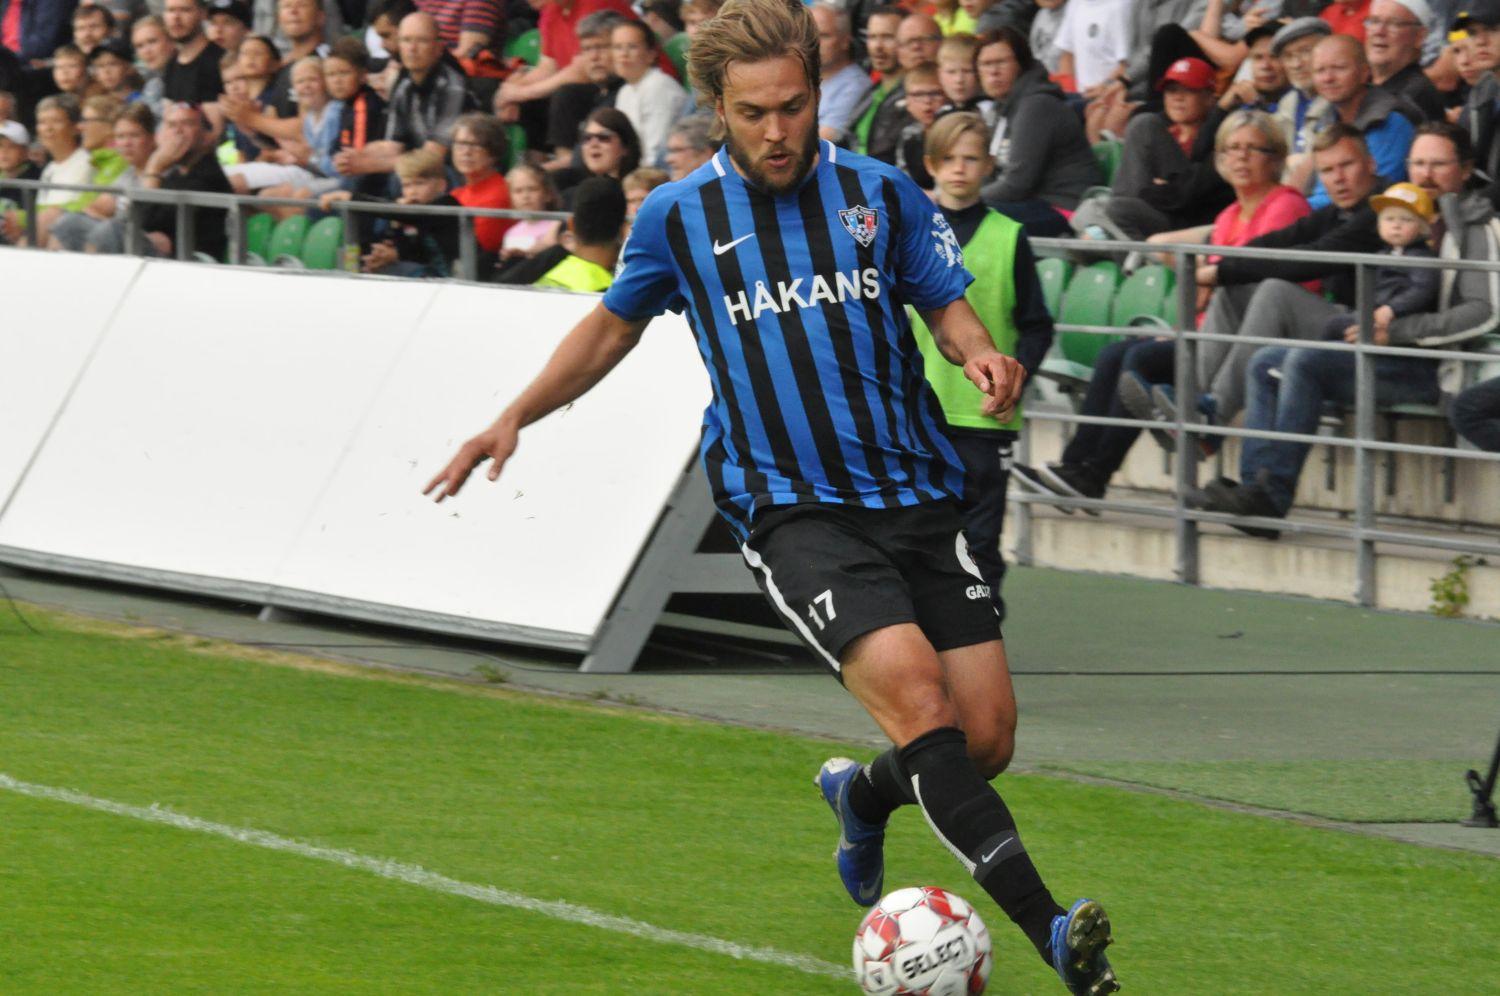 Fotbollspelaren Mika Ojala